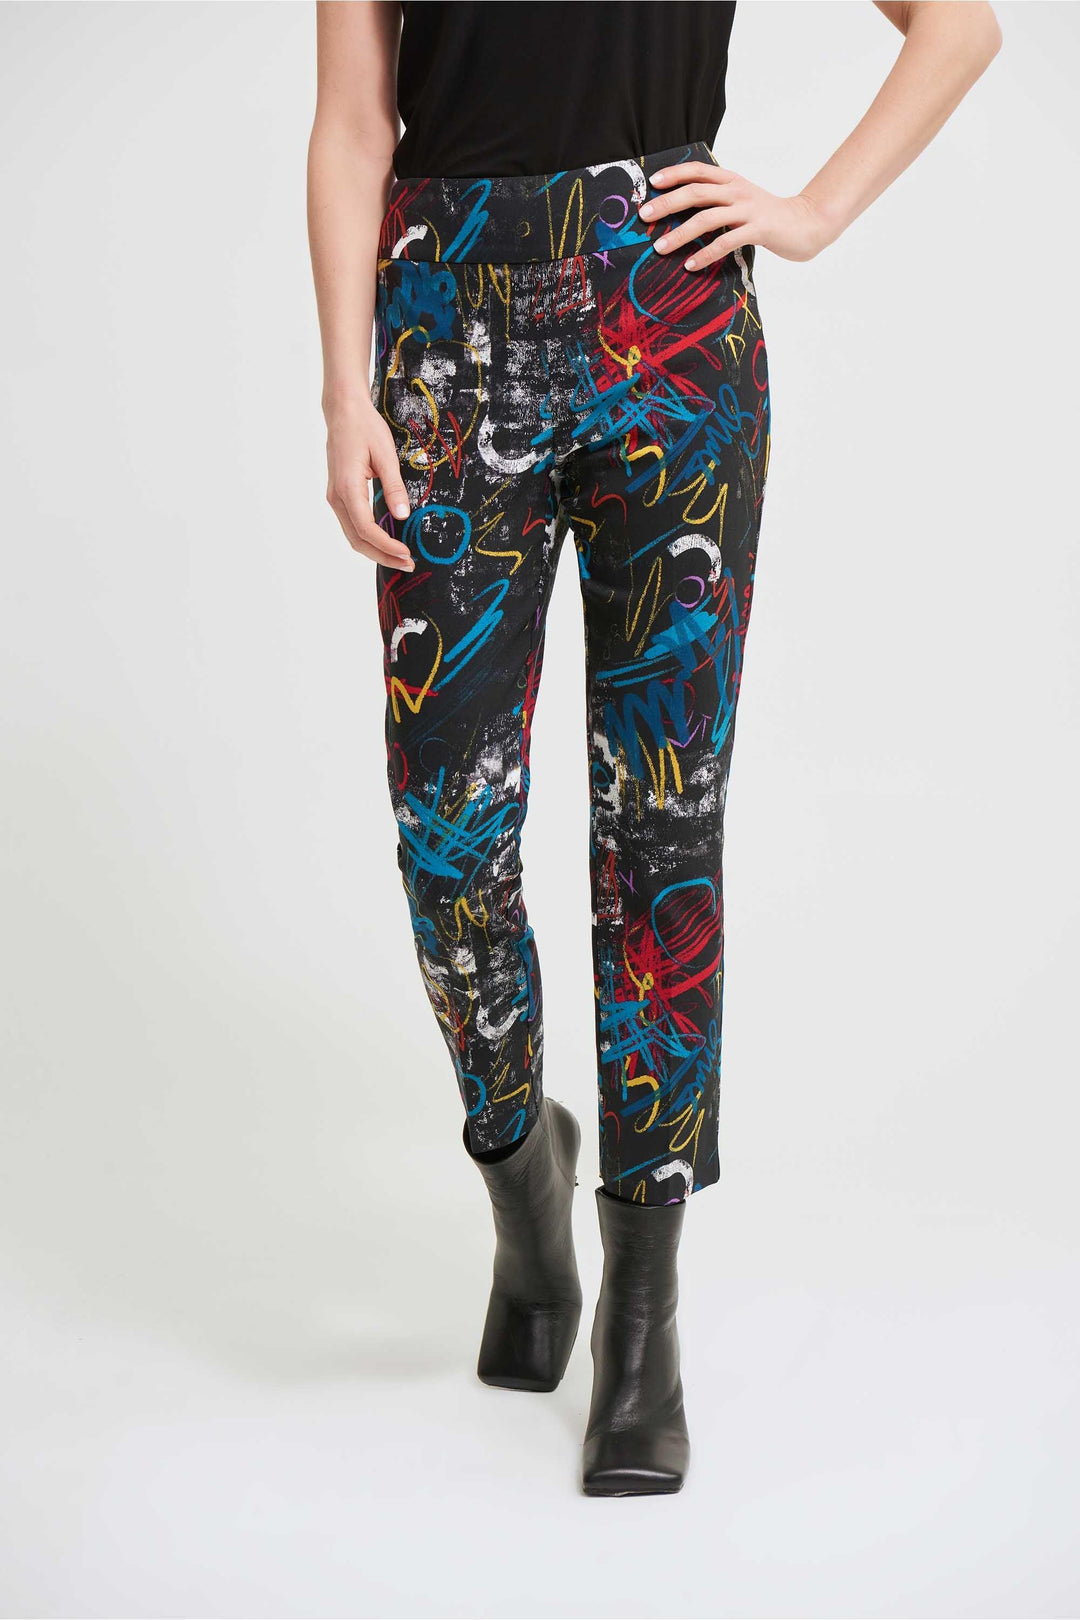 Joseph Ribkoff Black/Vanilla Graffiti Print Trouser Style 213696 - Trouser AW21, Black, Trouser, Vanilla ginasmartboutique